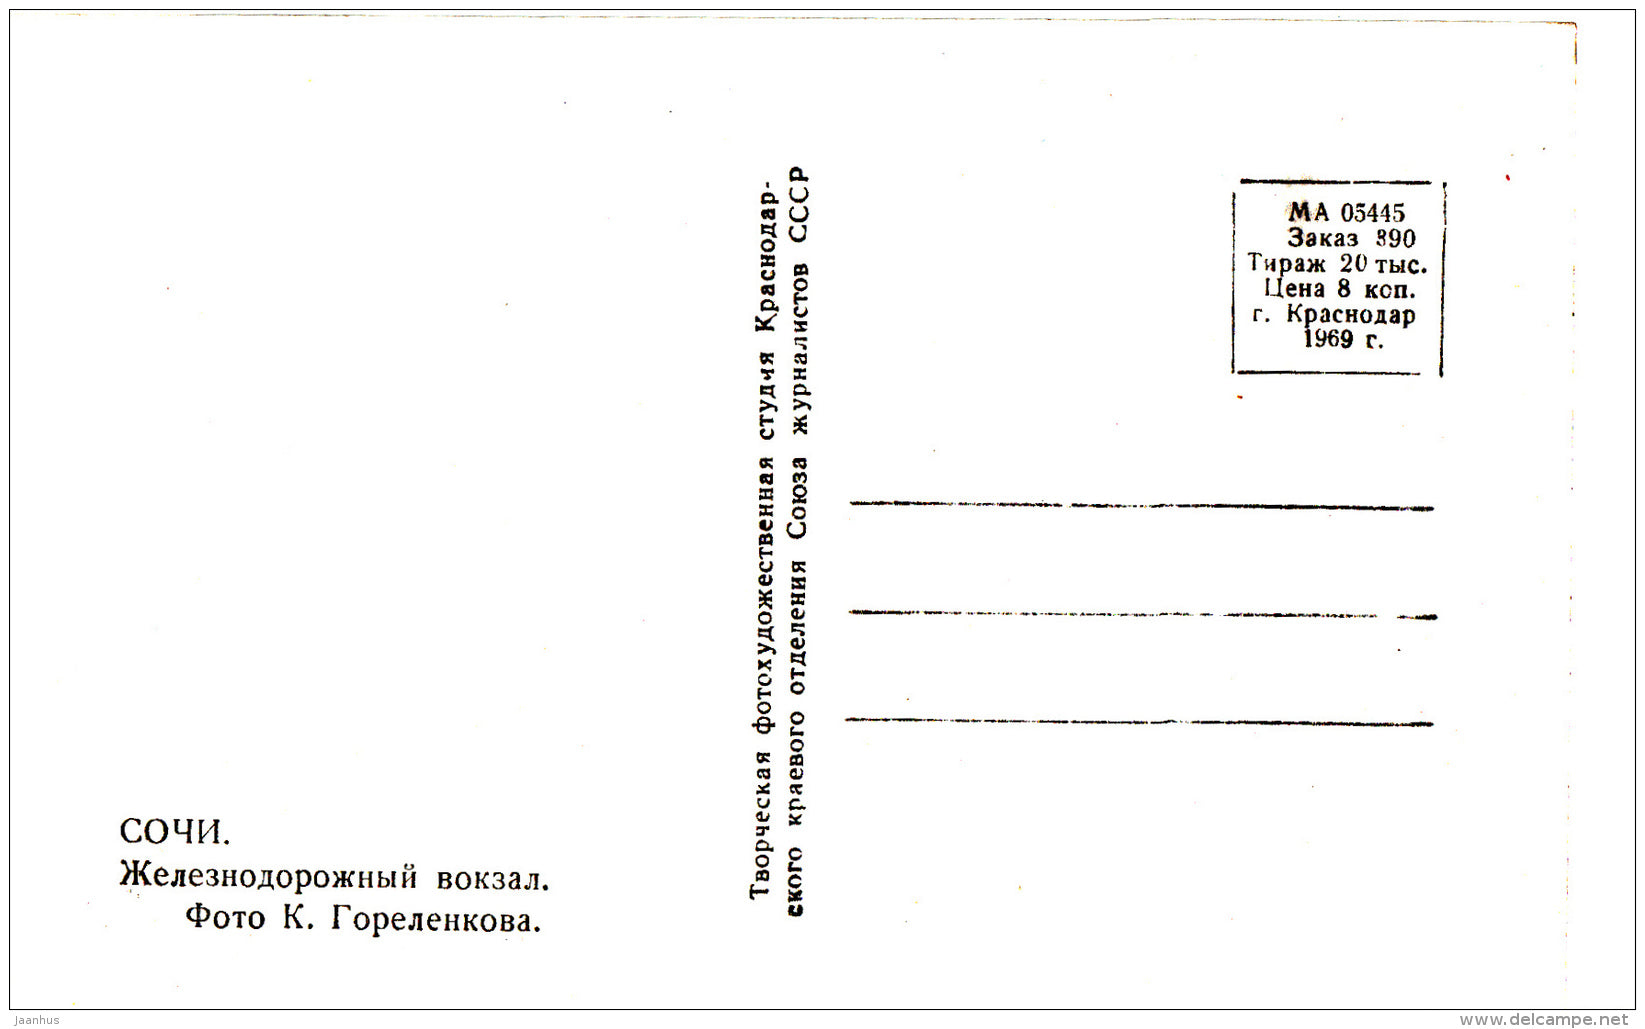 Railway Station - Sochi - 1969 - Russia USSR - unused - JH Postcards